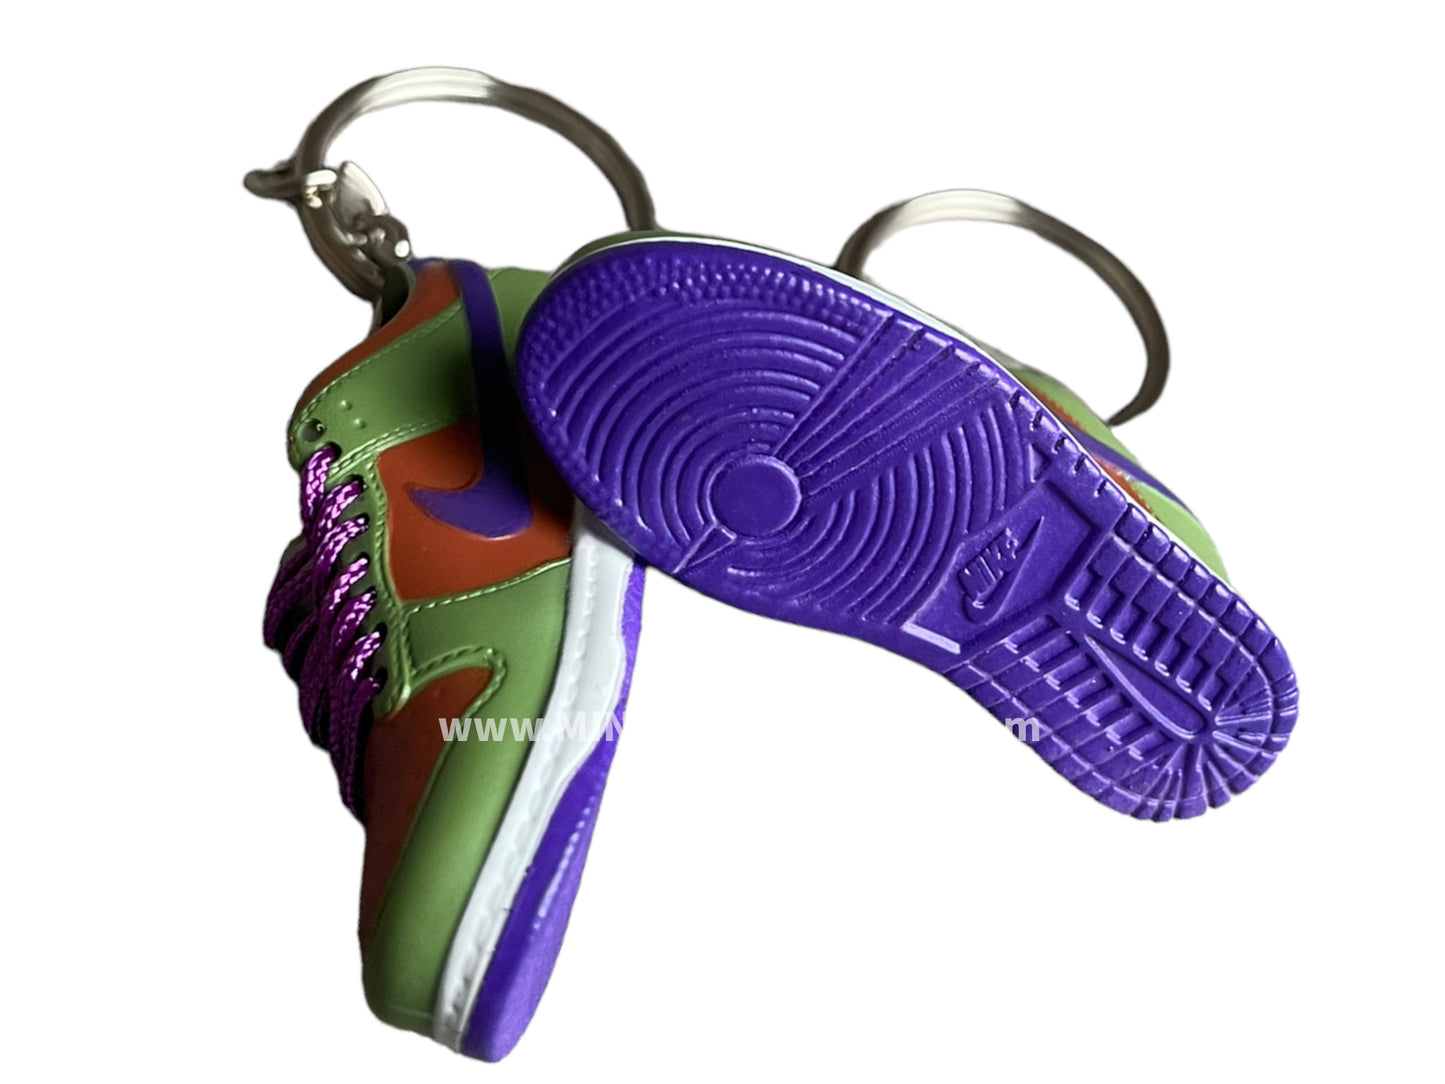 Mini sneaker keychain 3D Dunk - Brown and Purple